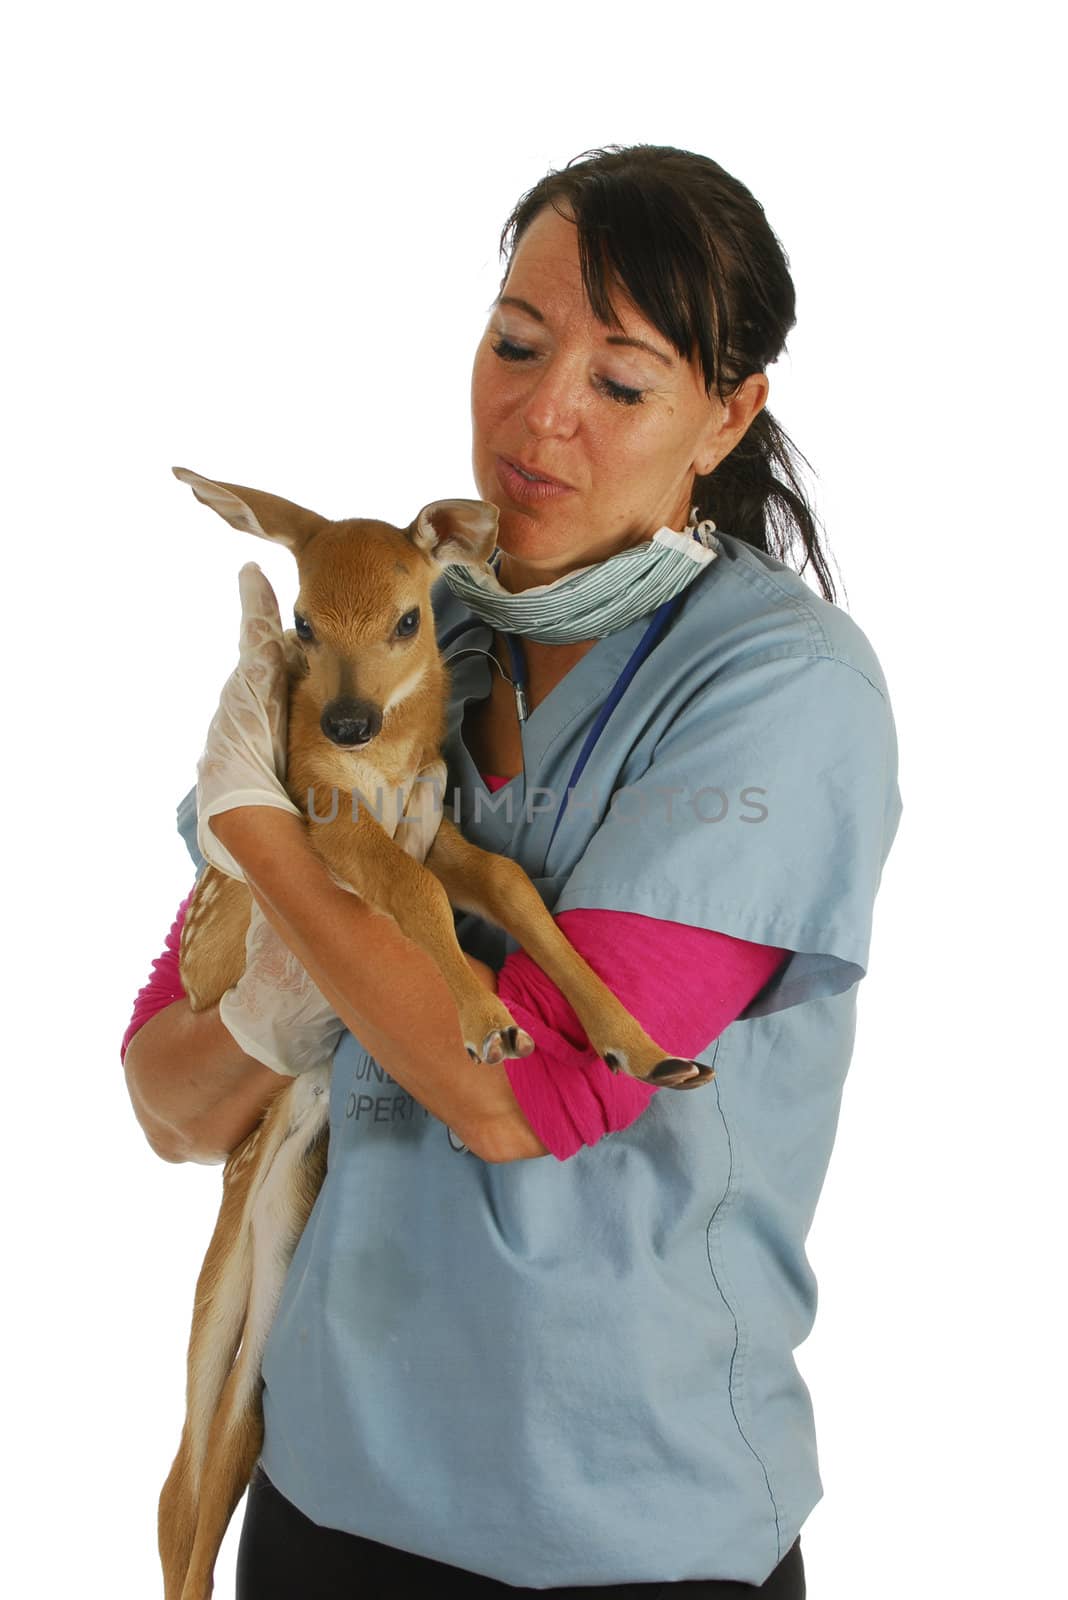 wildlife veterinary care by willeecole123